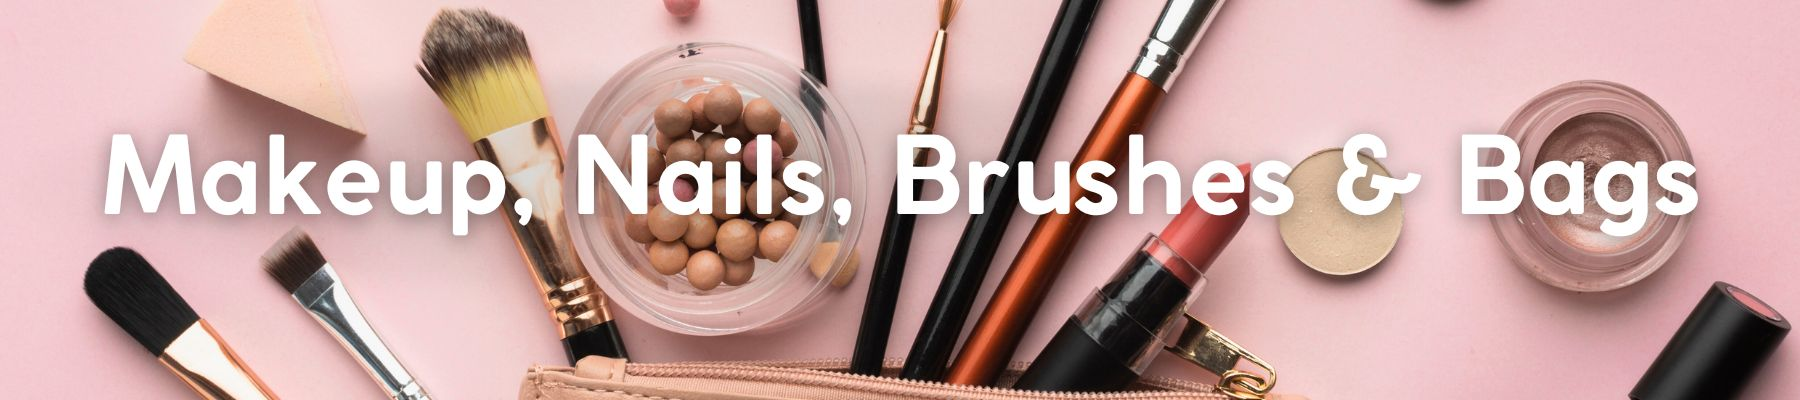 Makeup, Nails, Brushes & Bags